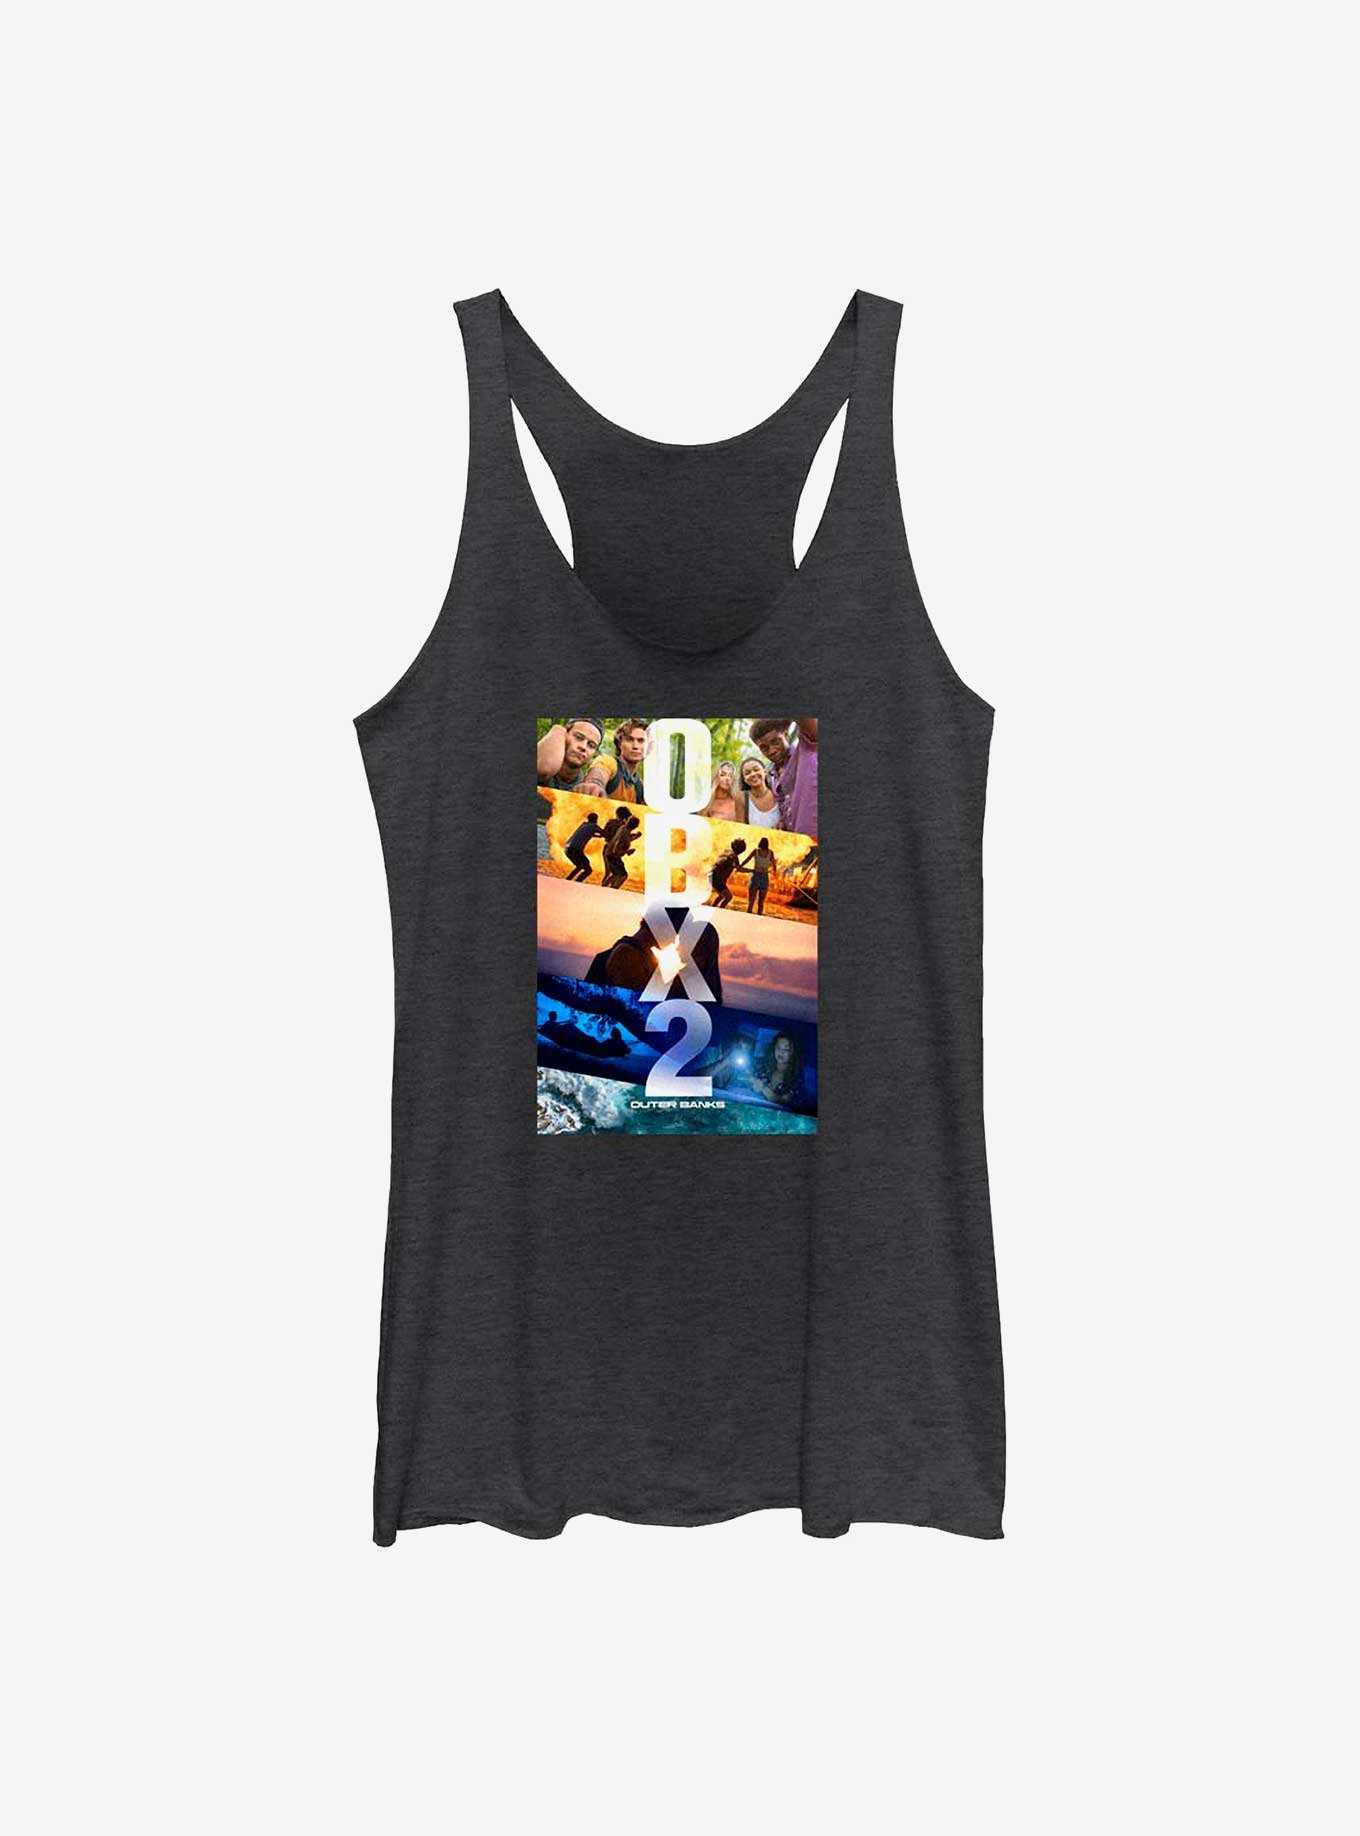 Outer Banks OBX2 Poster Girls Tank, , hi-res